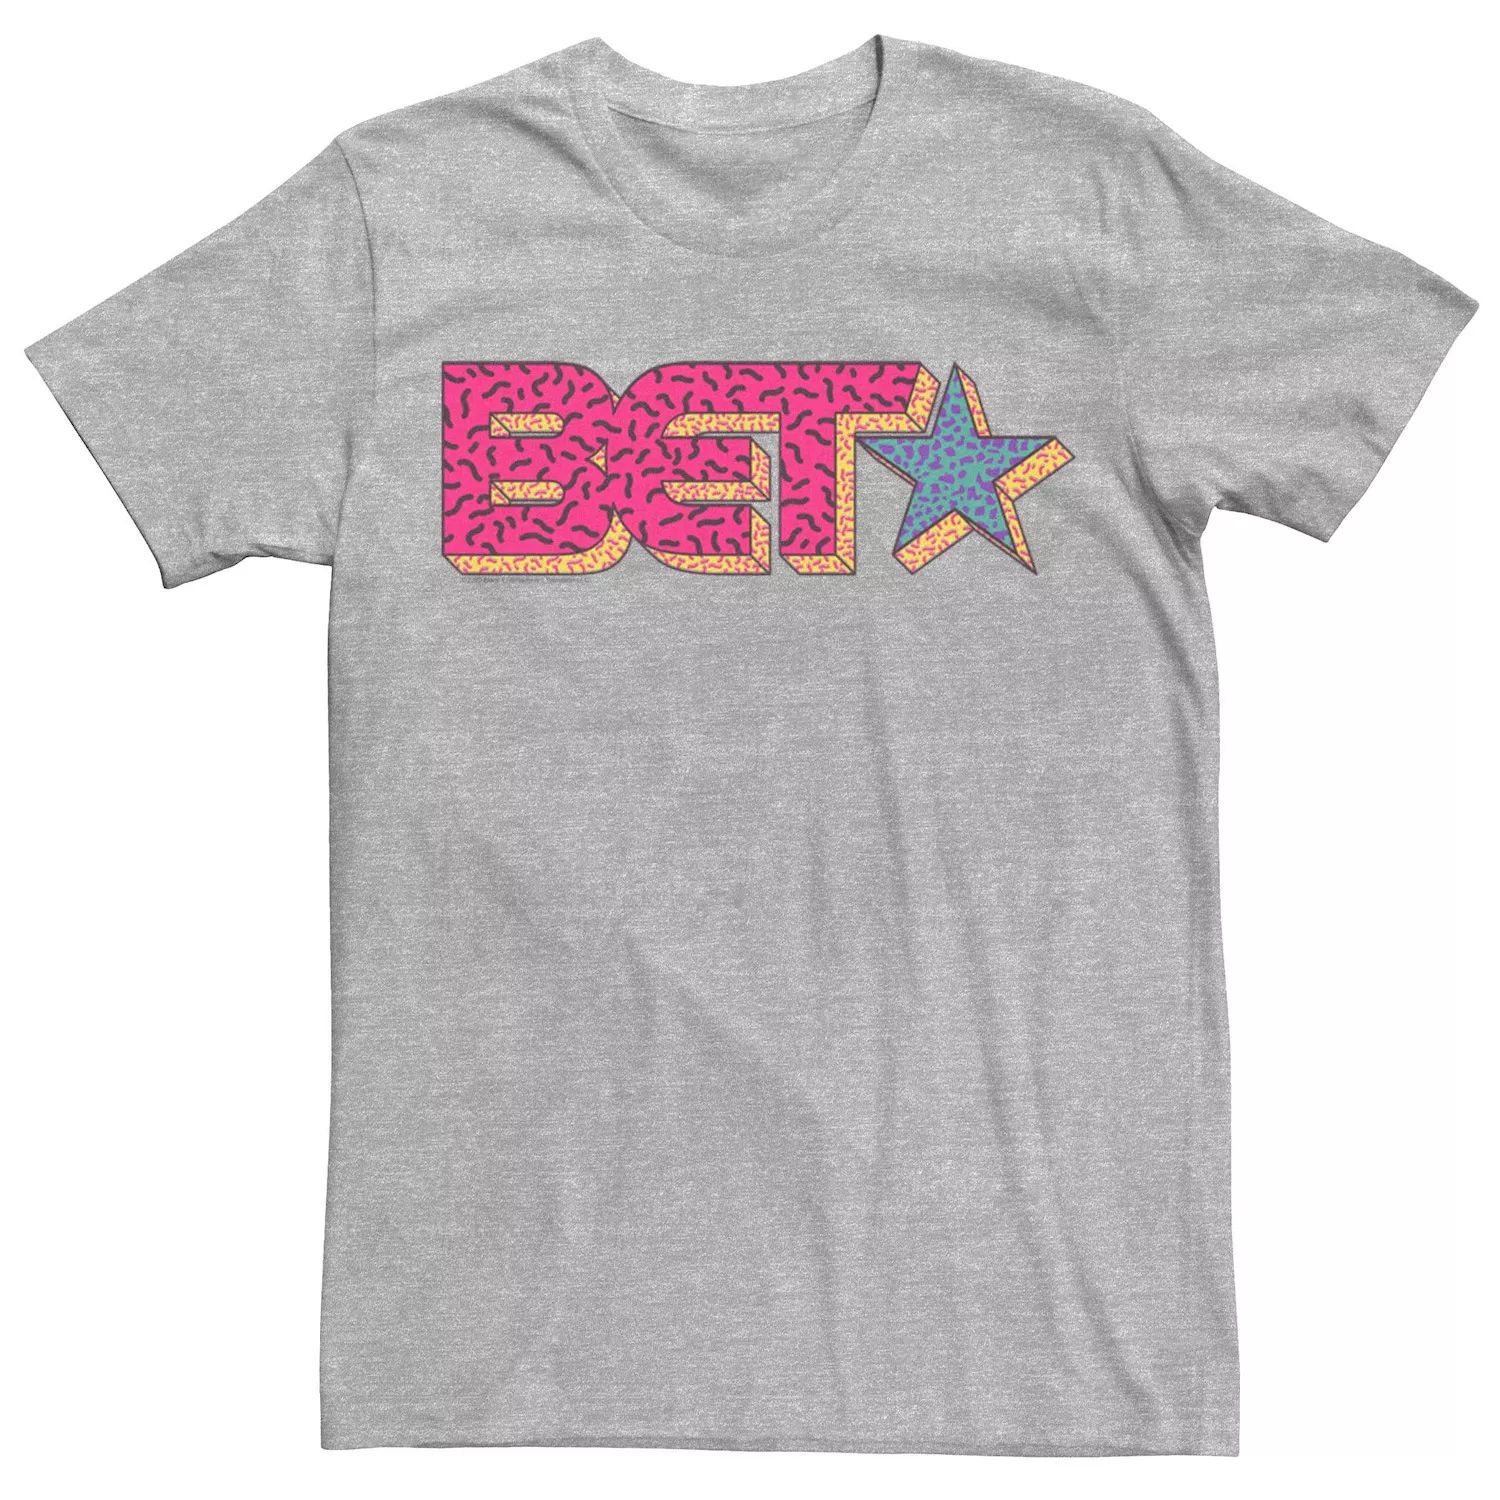 мужская футболка с коротким рукавом parks project yosemite в стиле 90 х годов Мужская футболка с логотипом BET в стиле 90-х годов Licensed Character